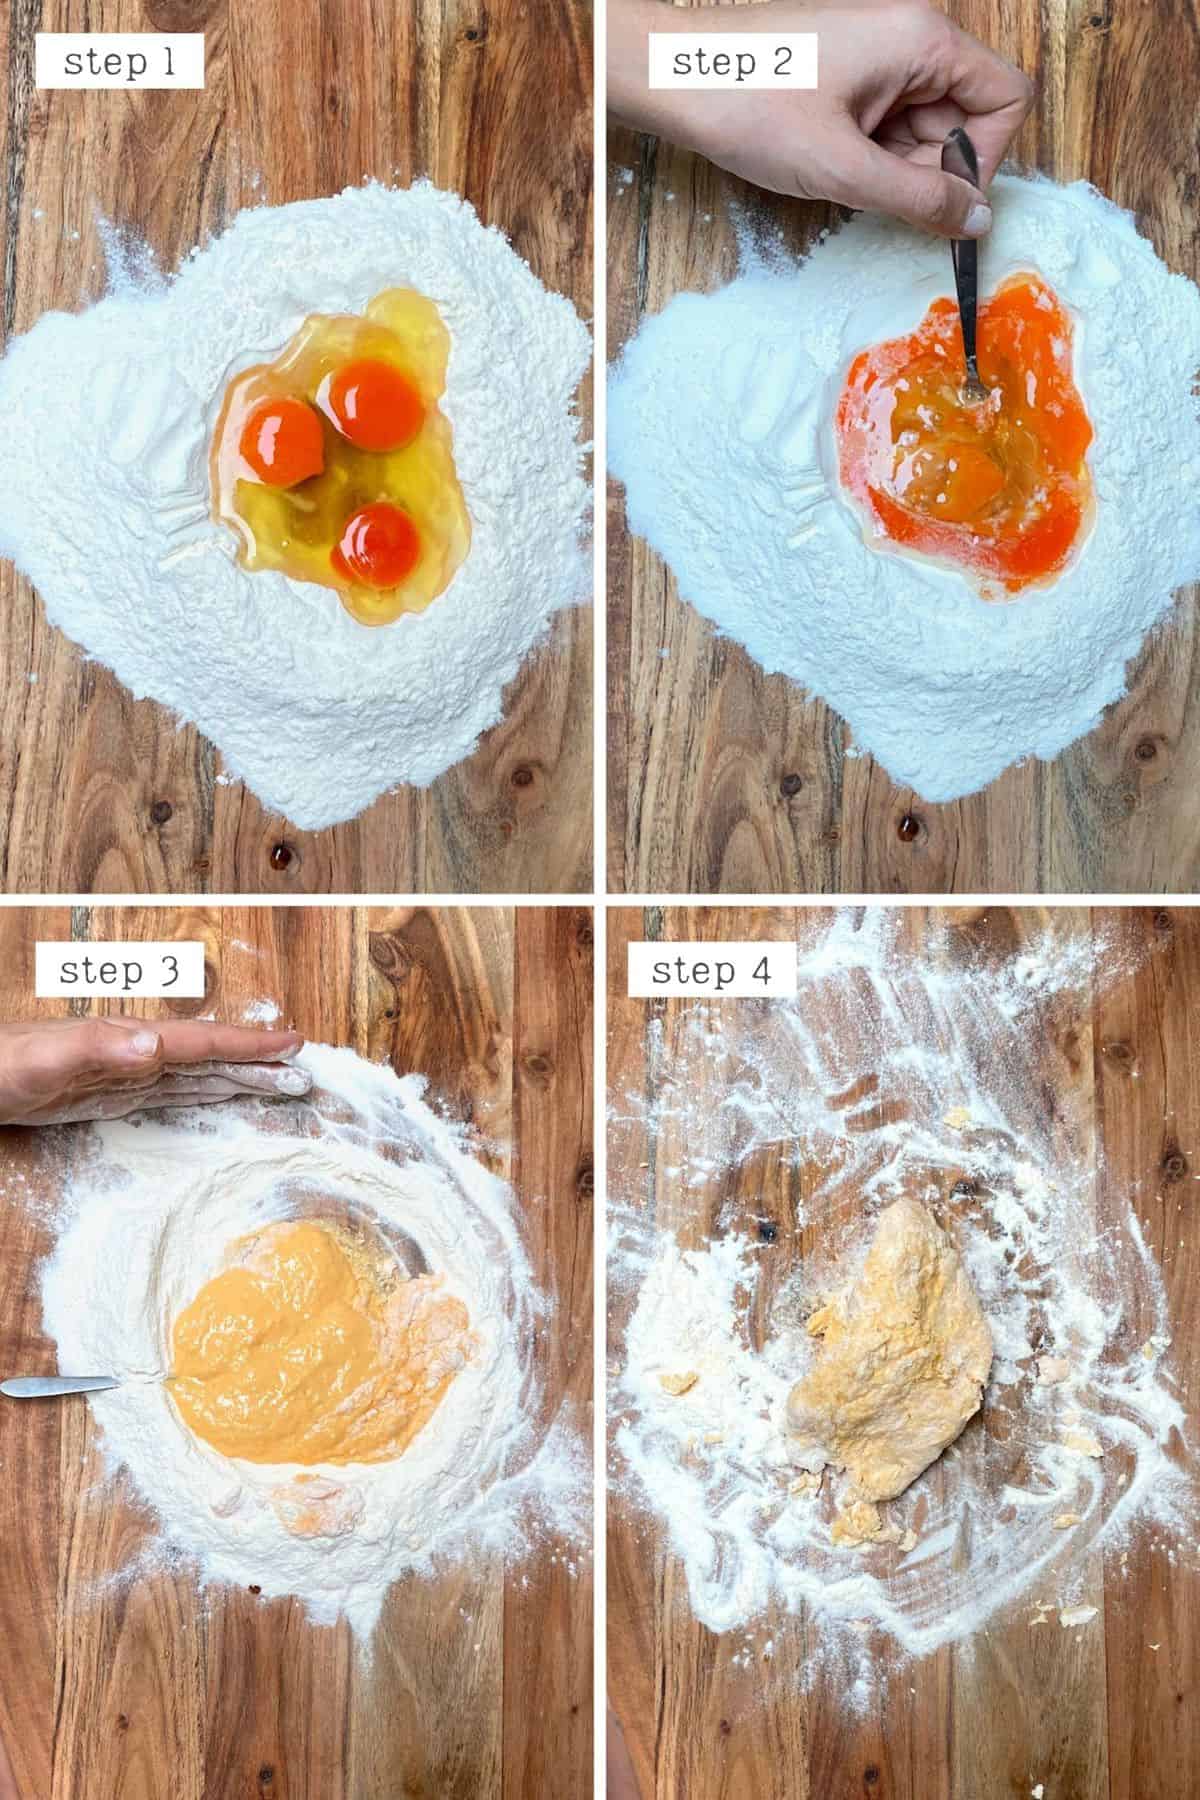 Steps for making ravioli dough